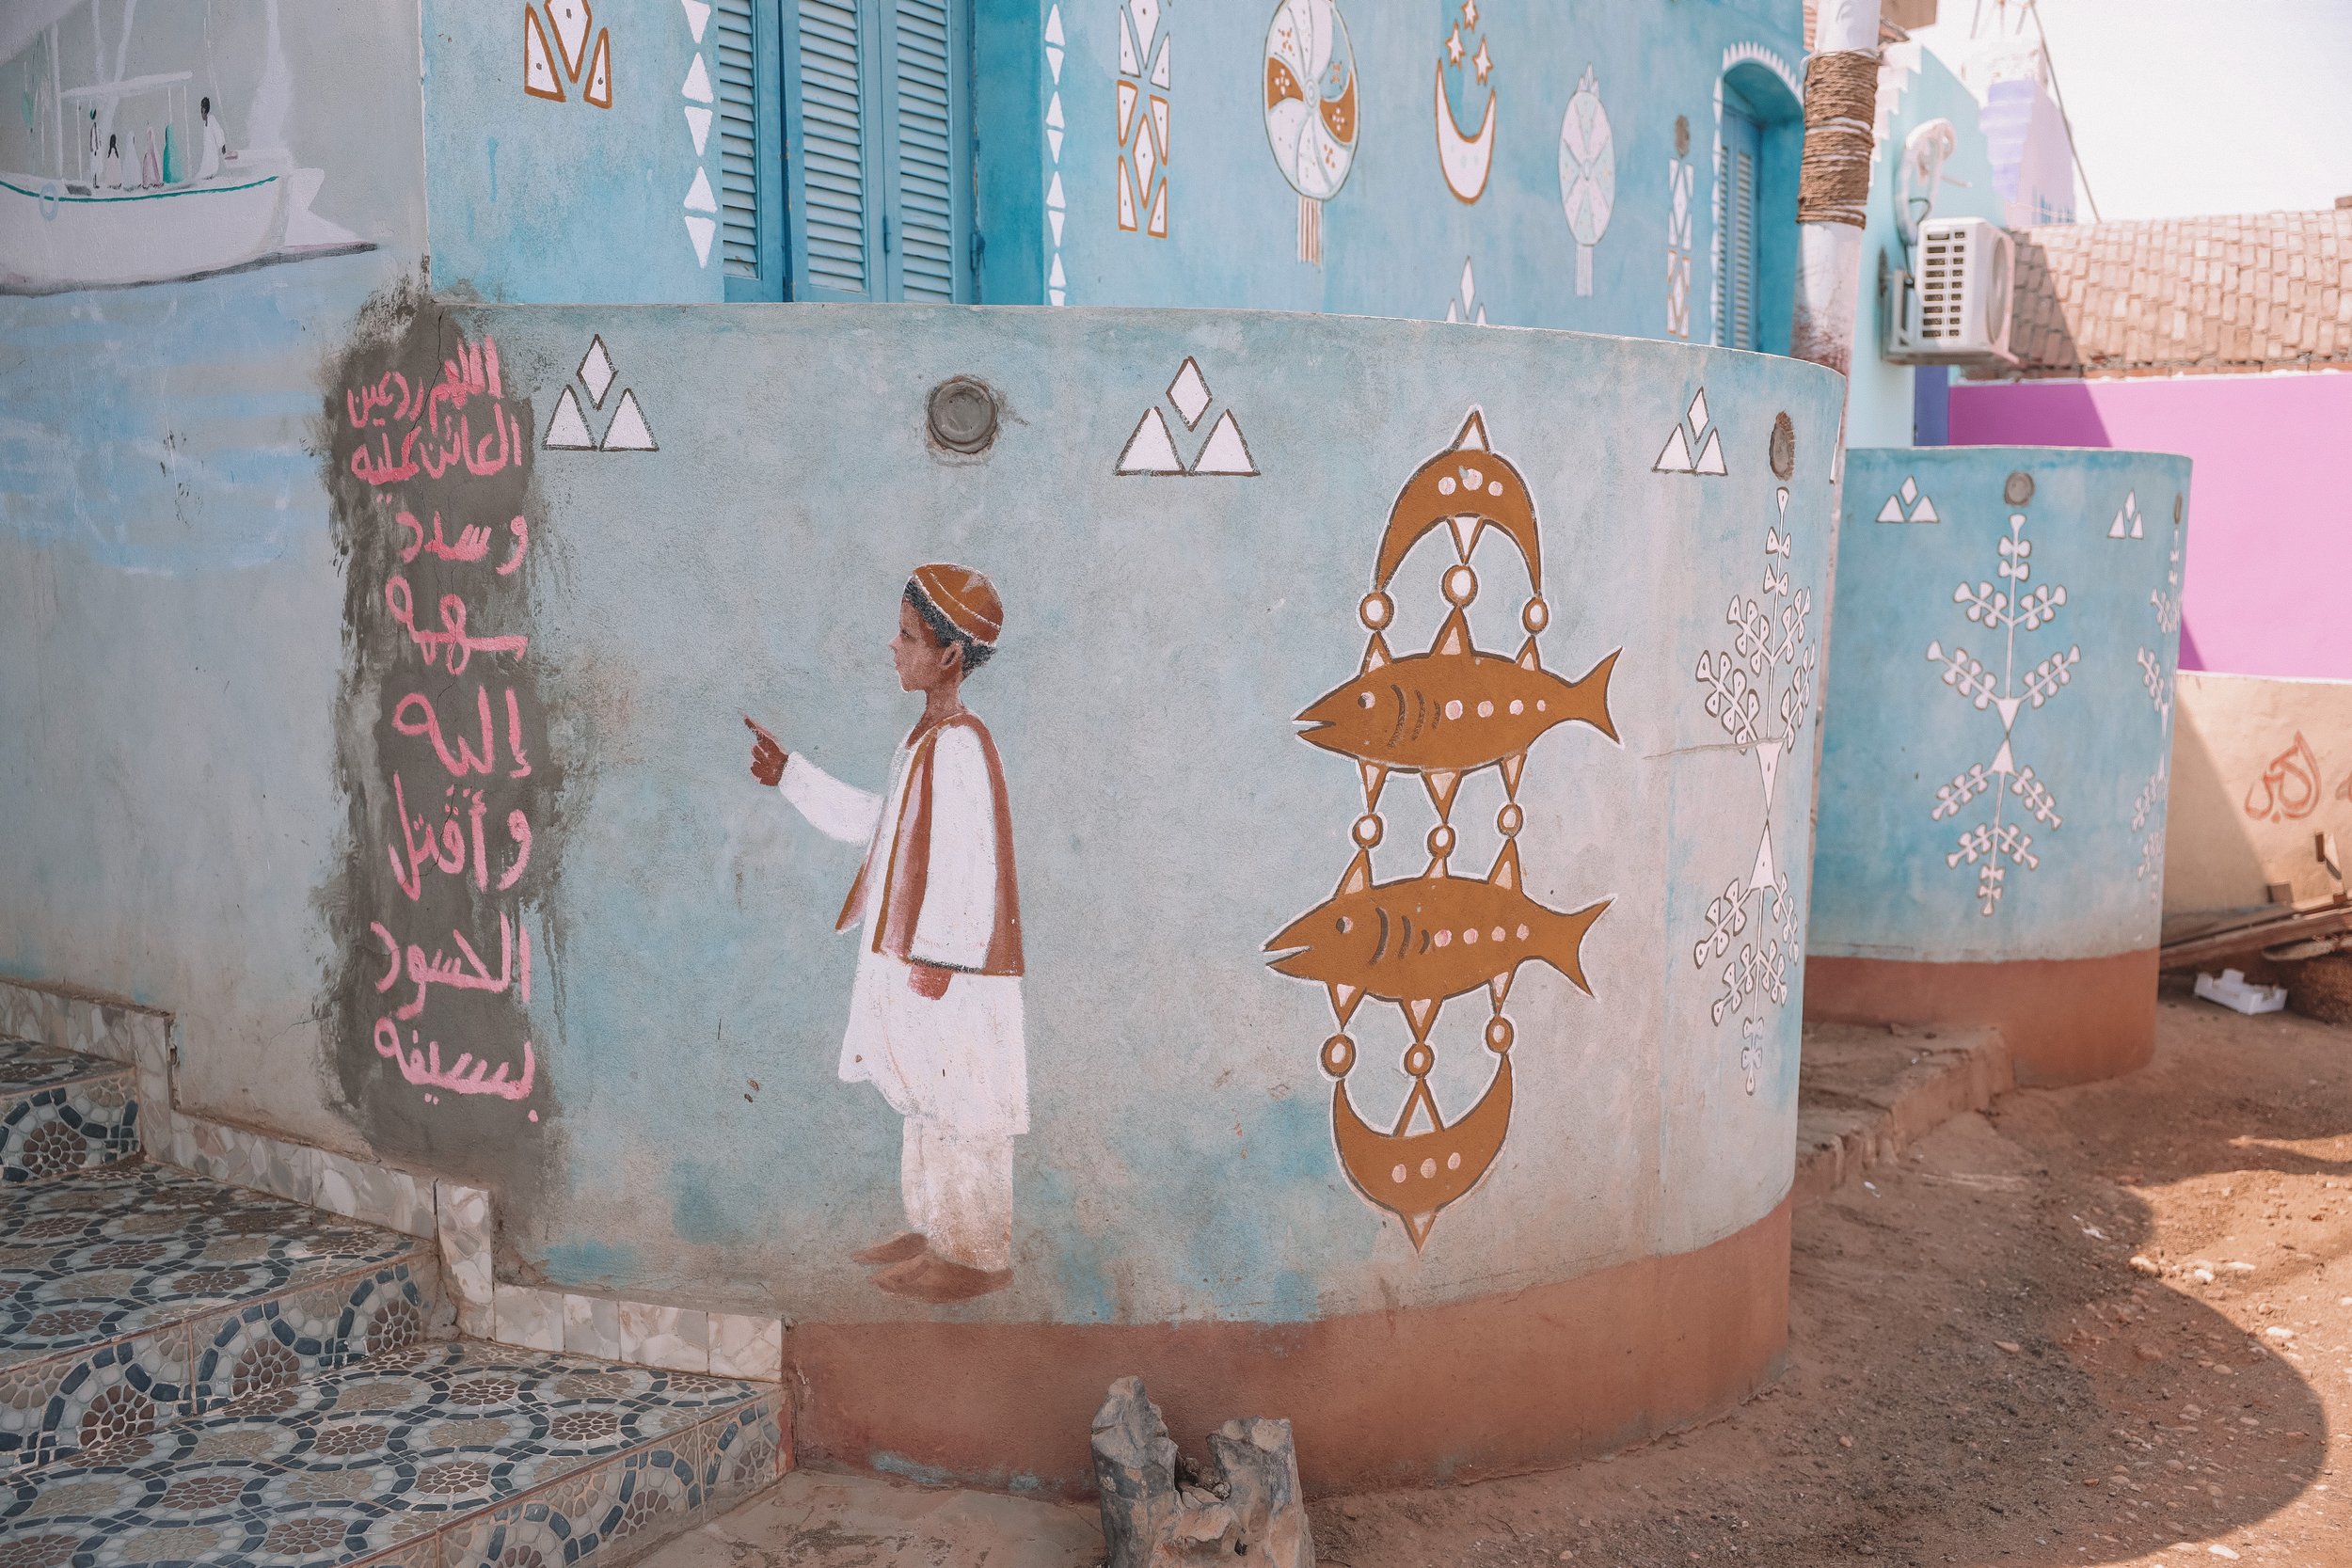 Exploring the streets - Nubian Village - Aswan - Egypt